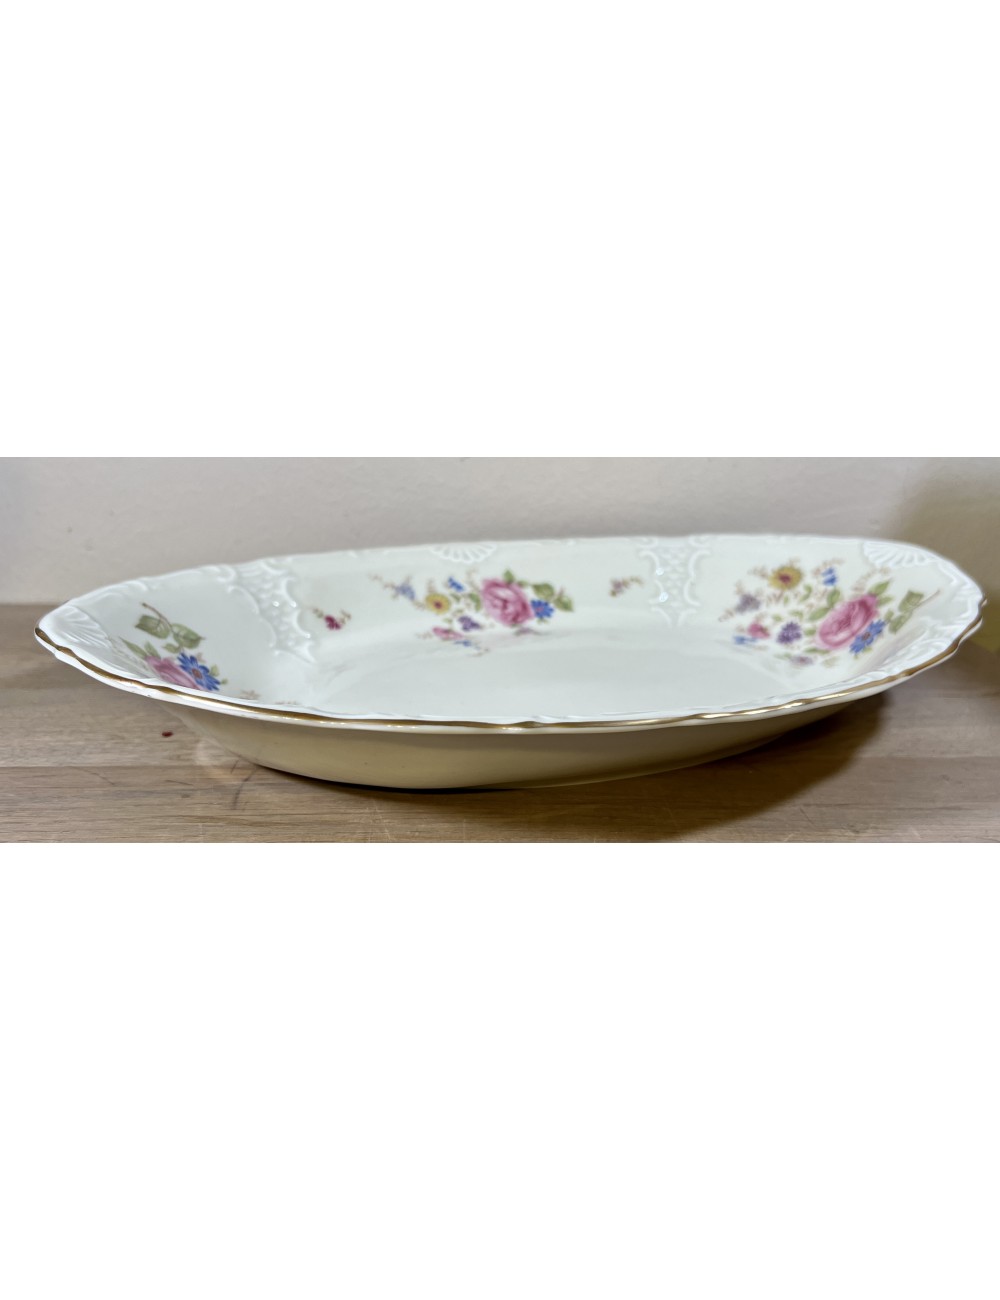 Bread bowl / Plate - oval model - Mosa - décor in blue/pink flowers